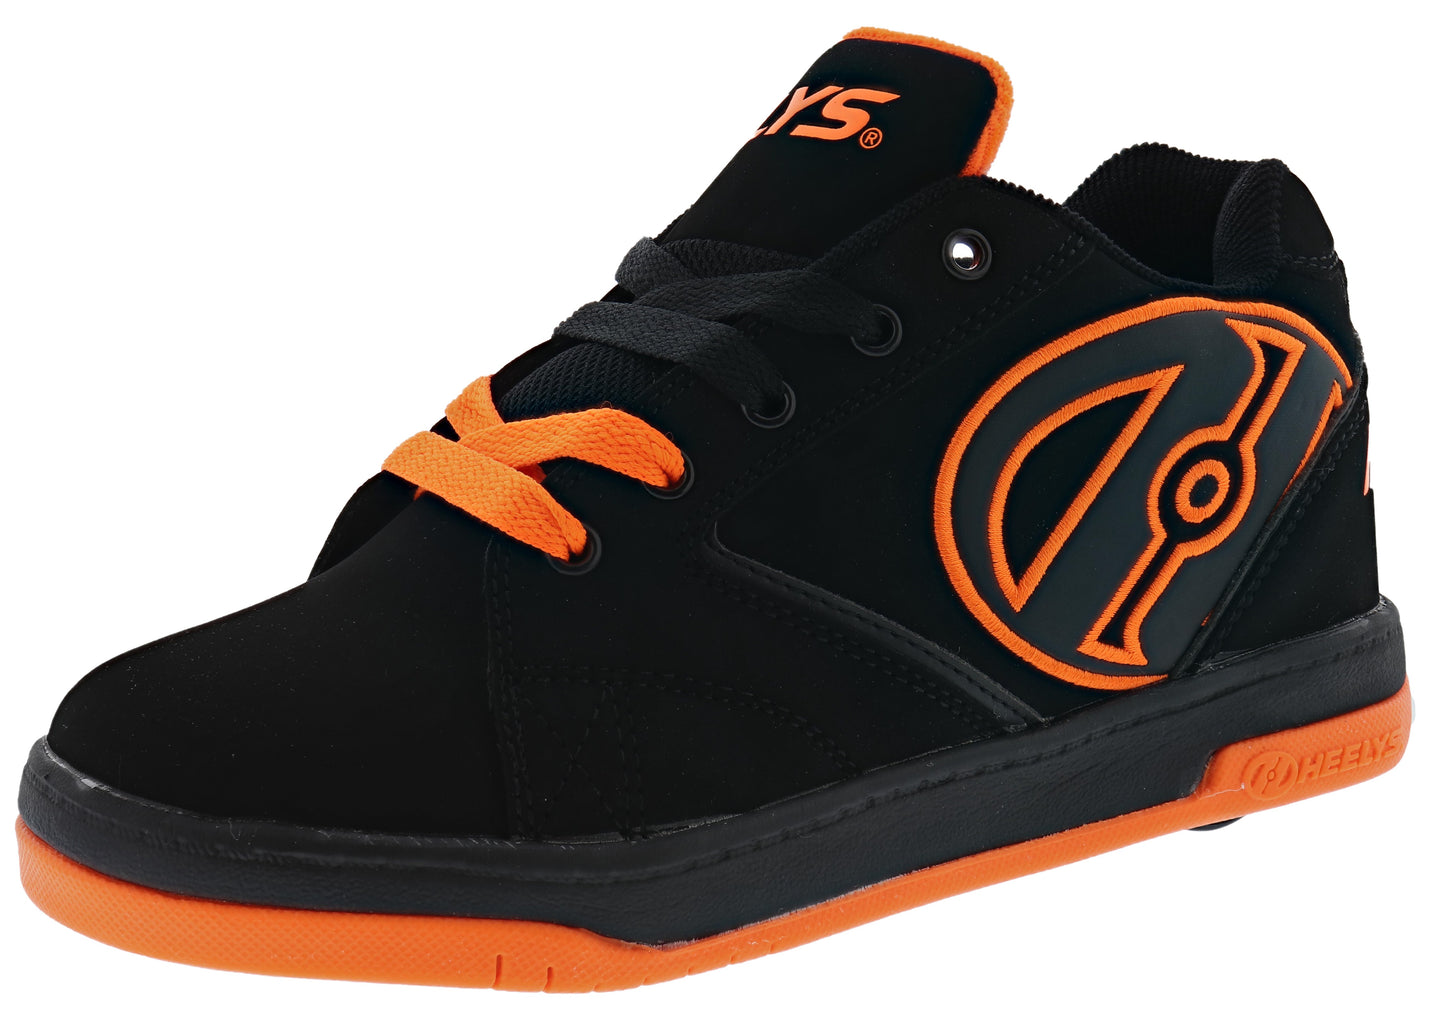 
                  
                    Heelys Kids Skateboard Skate Shoes Propel 2.0
                  
                